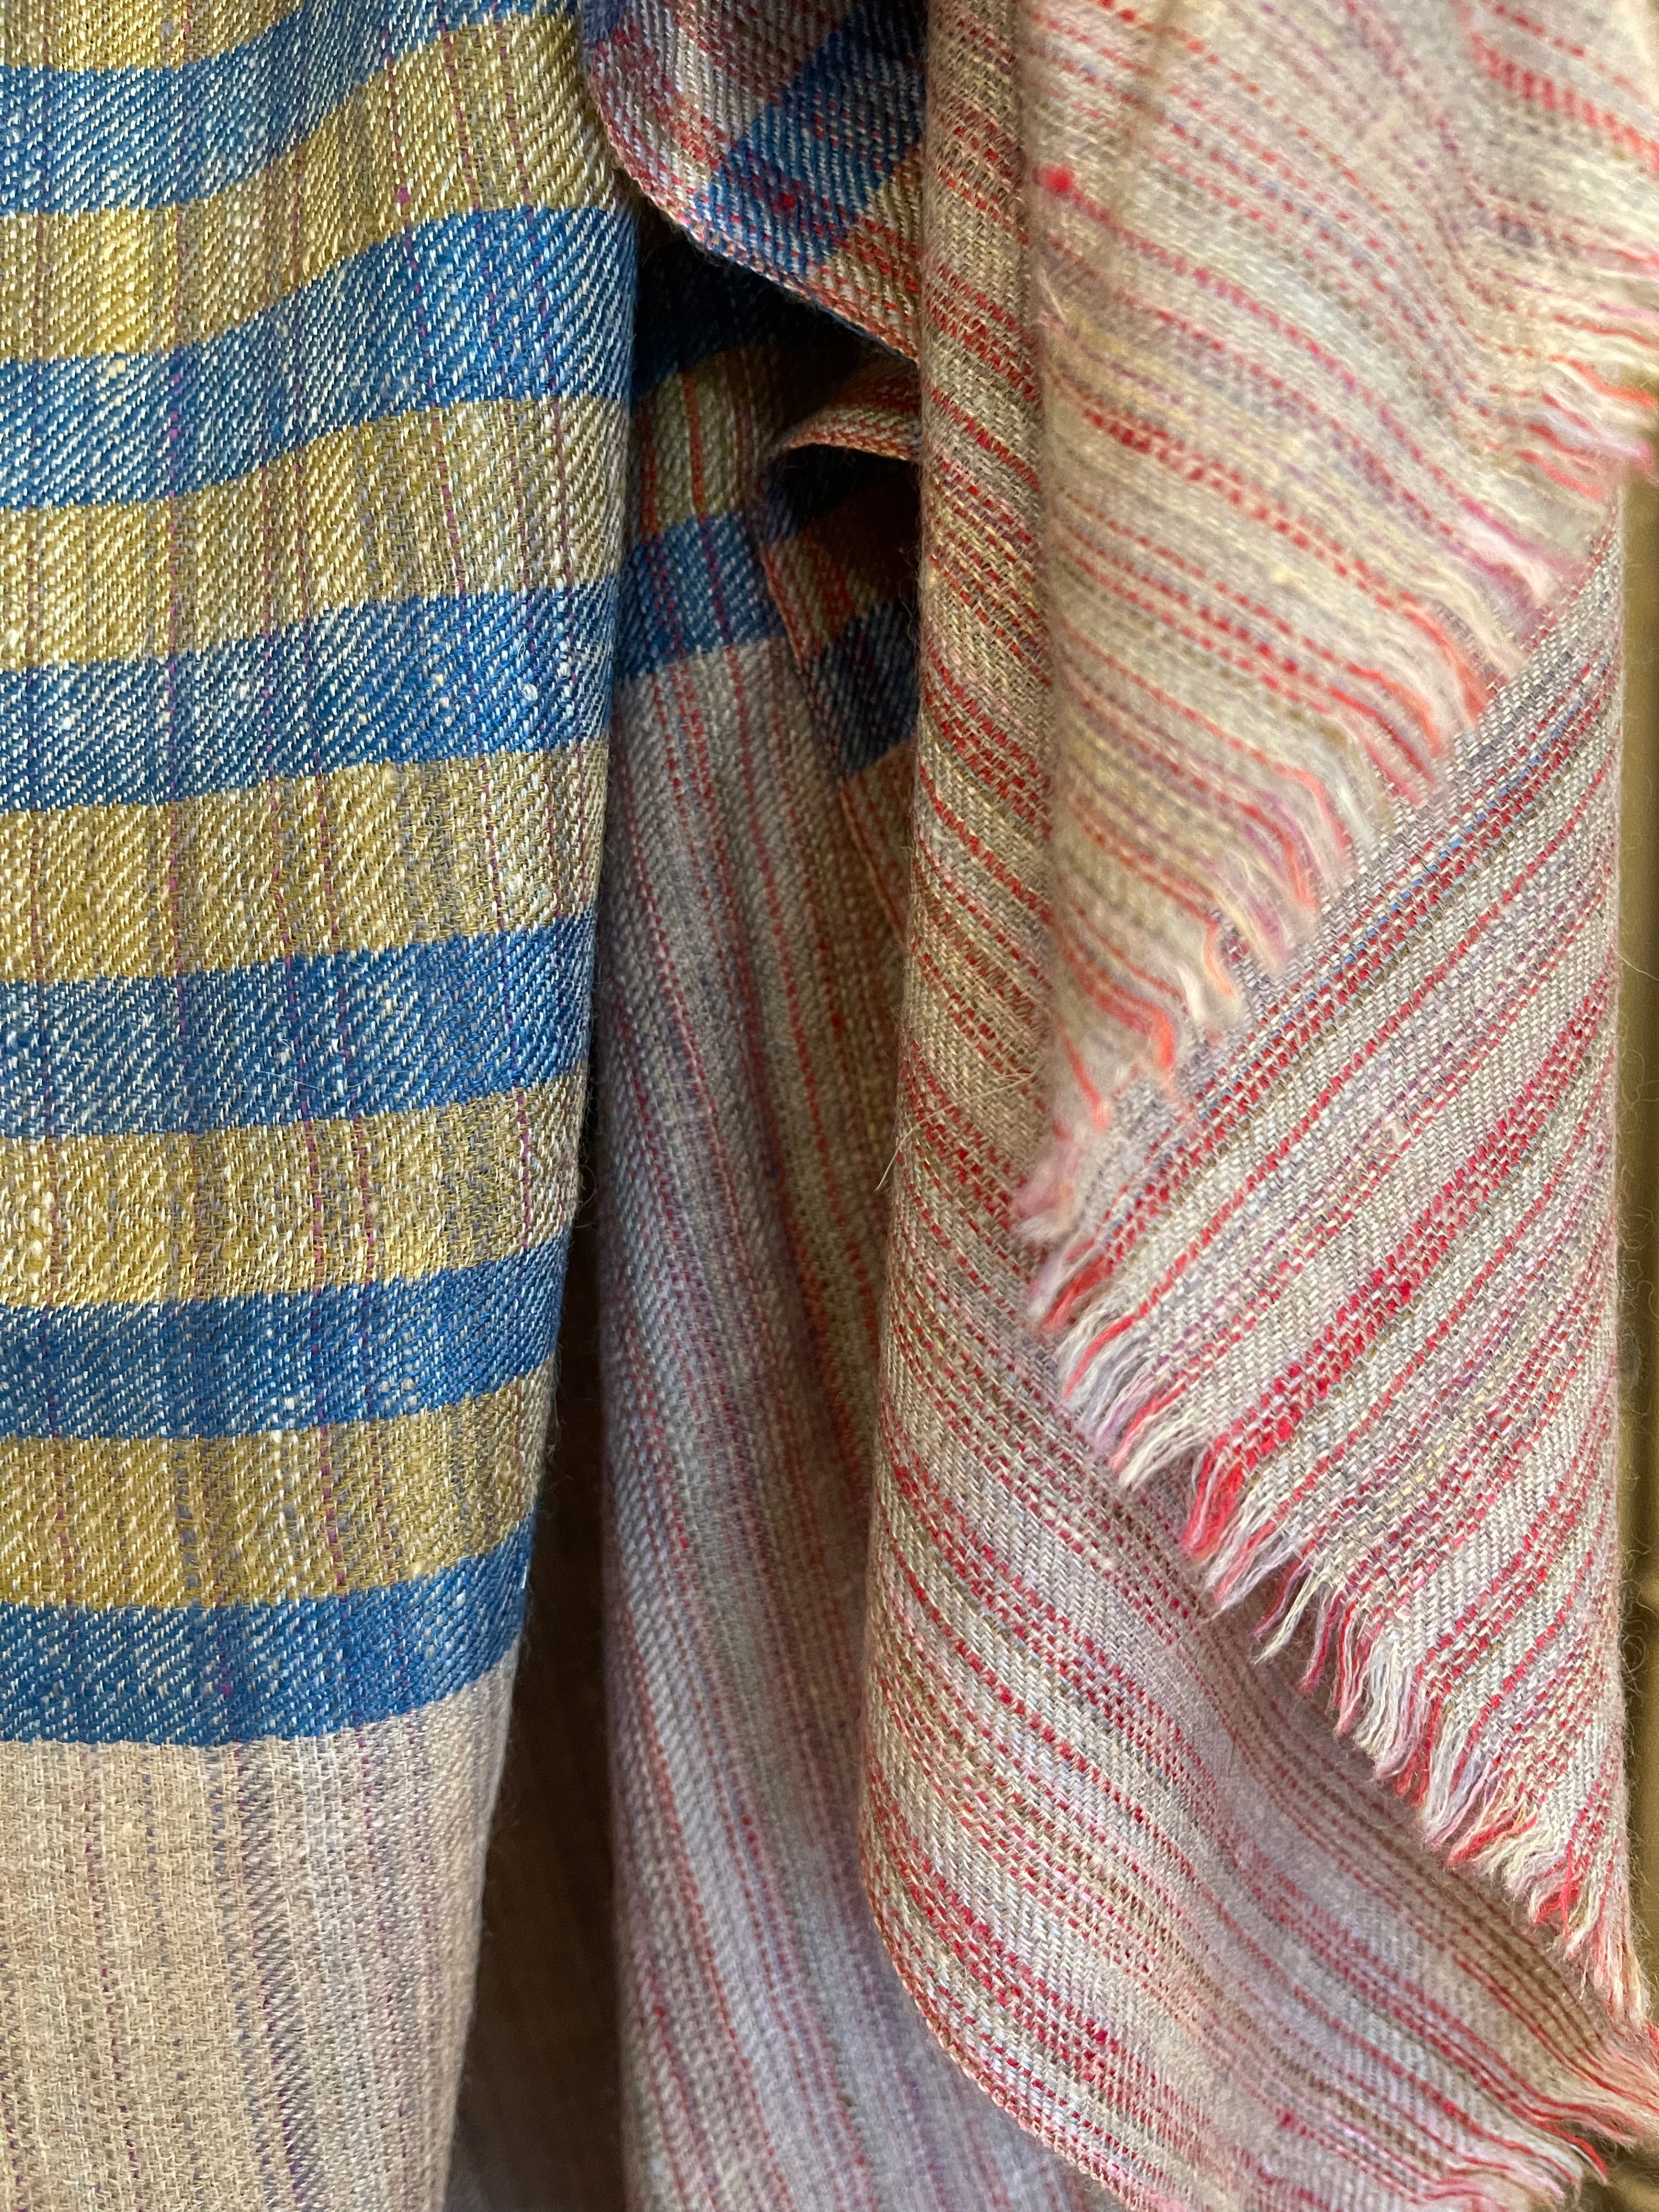 Pashmina Handloomed Scarf - Madras Stripe